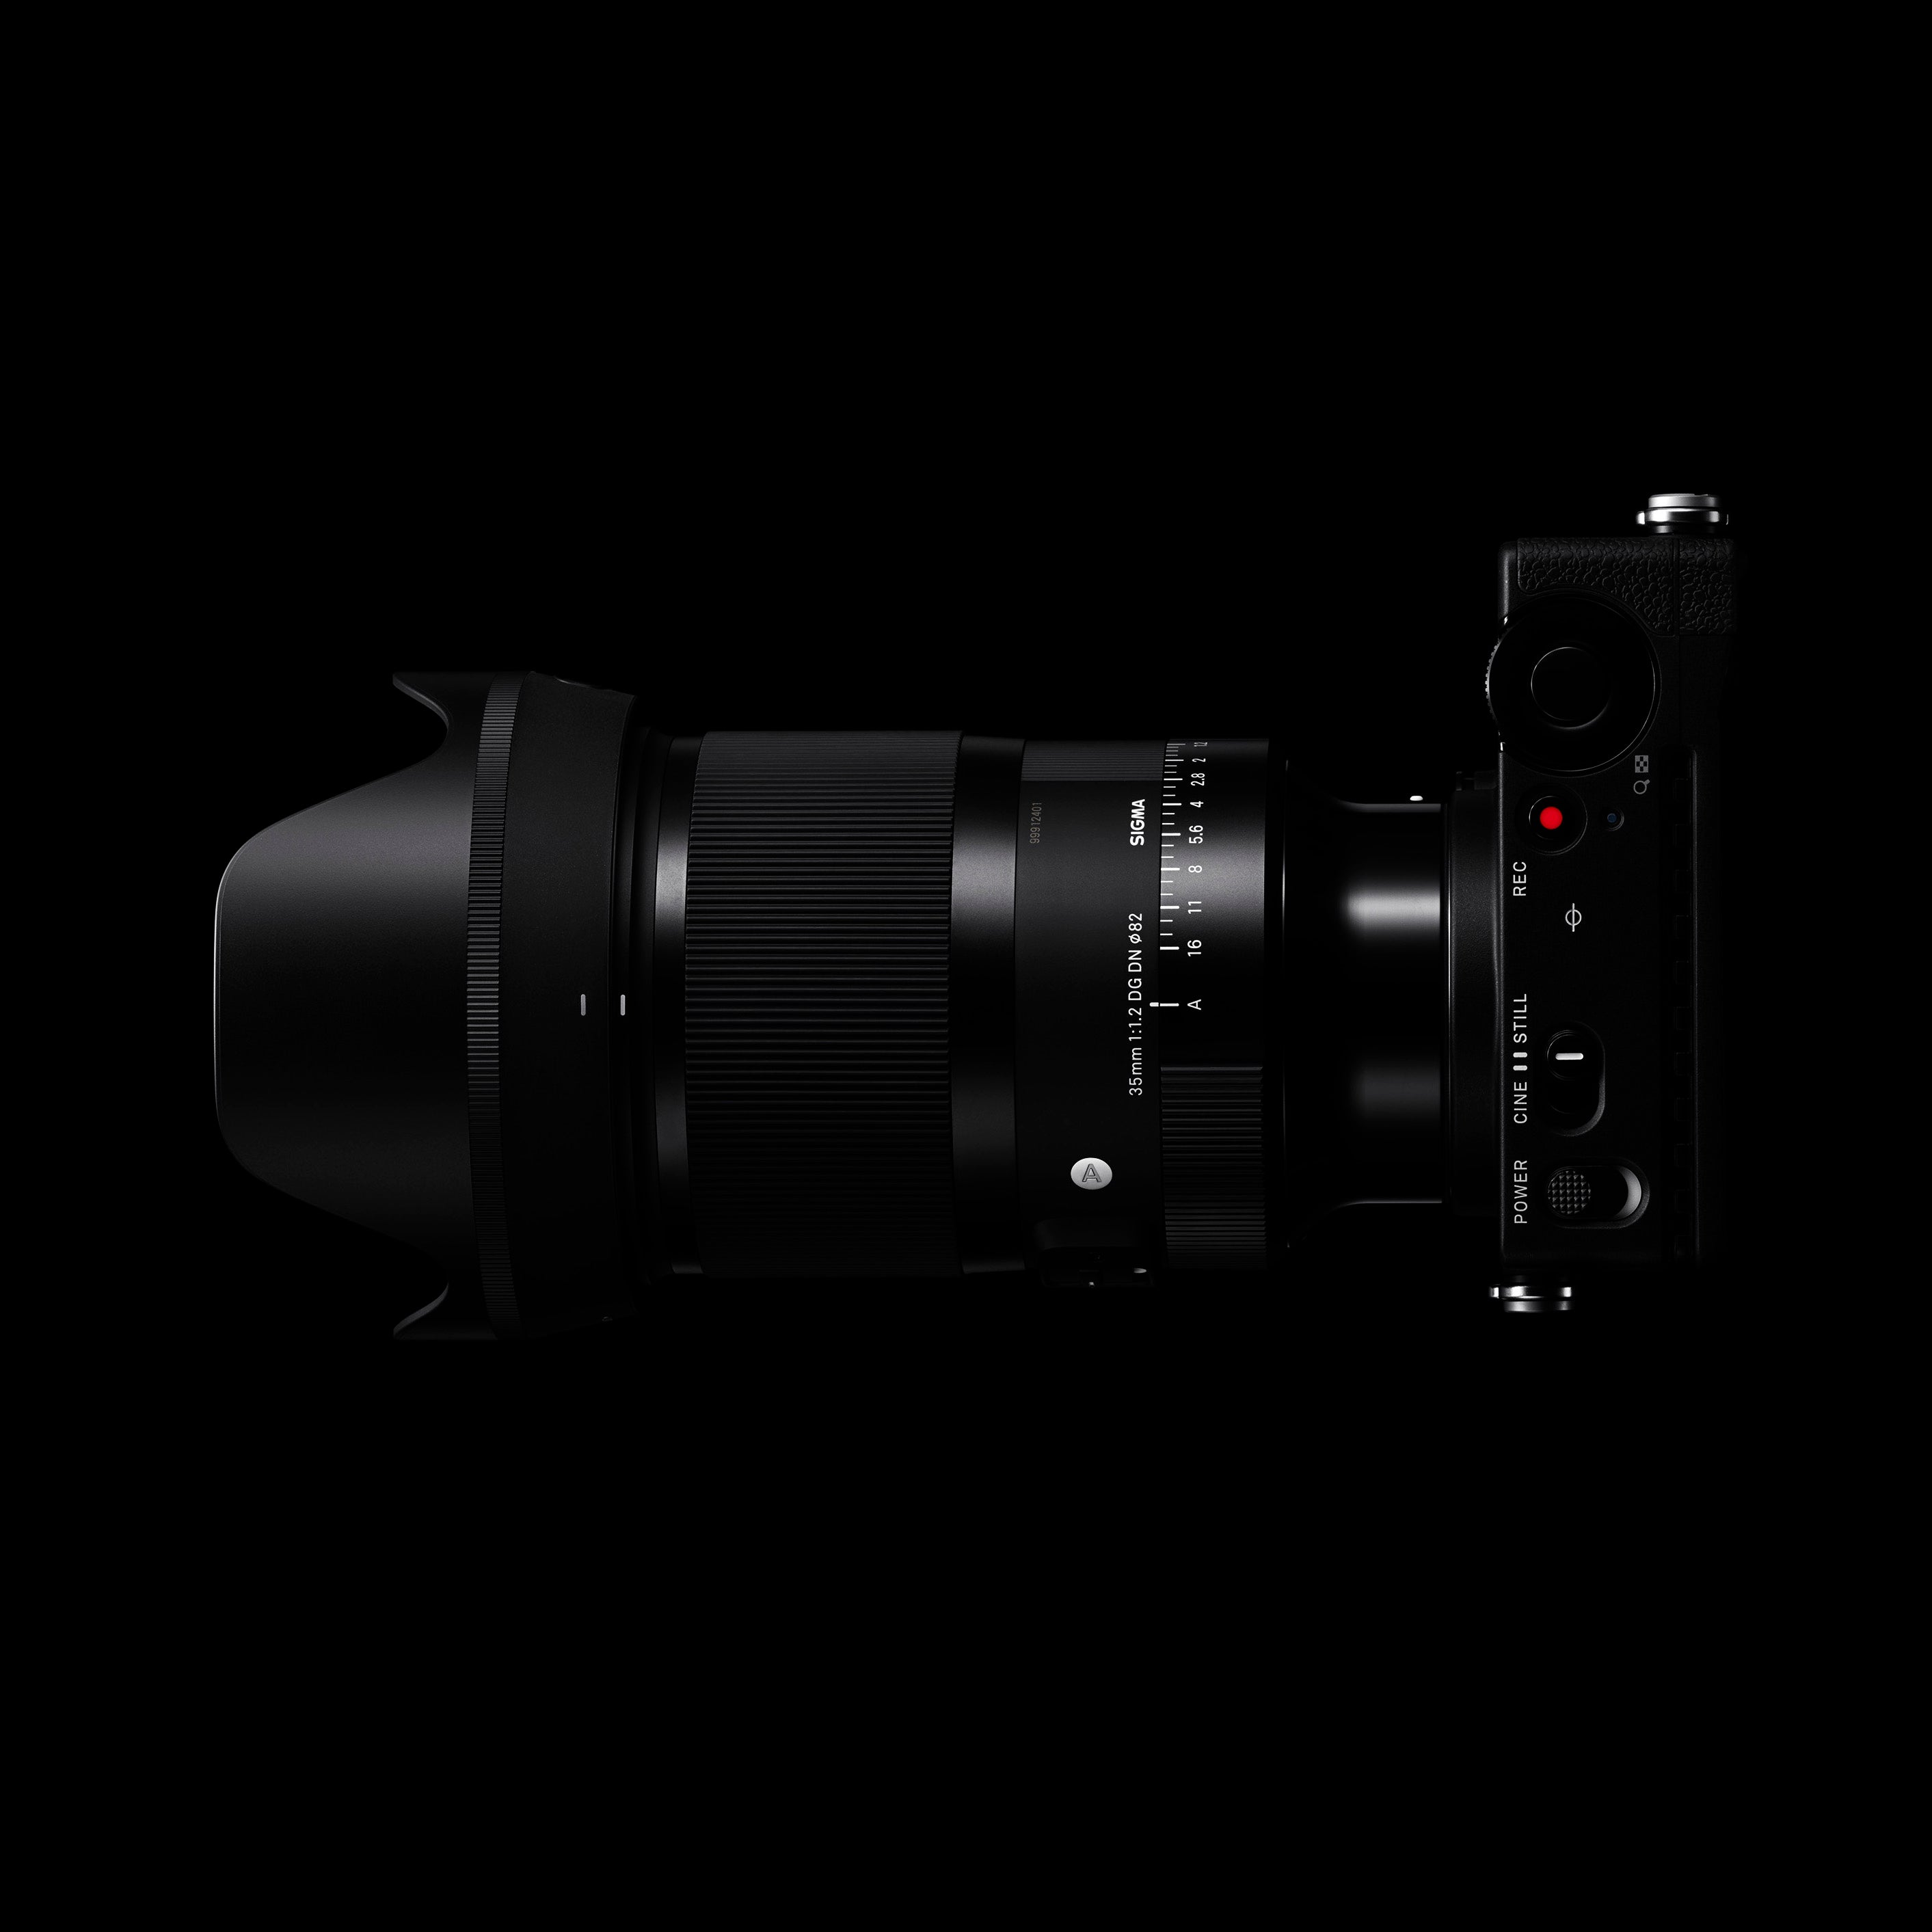 Sigma 35mm f1.2 DG DN Lens for Sony E mount